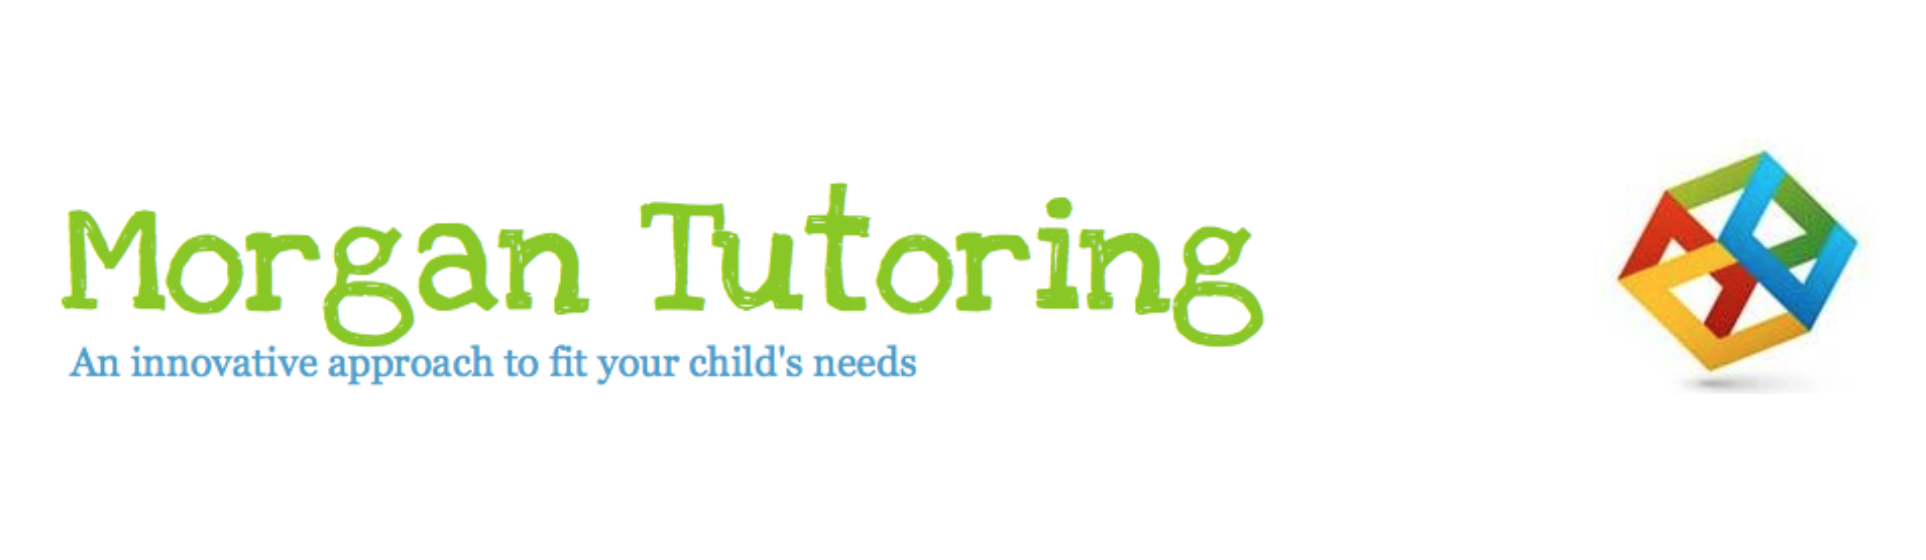 Morgan Tutoring logo